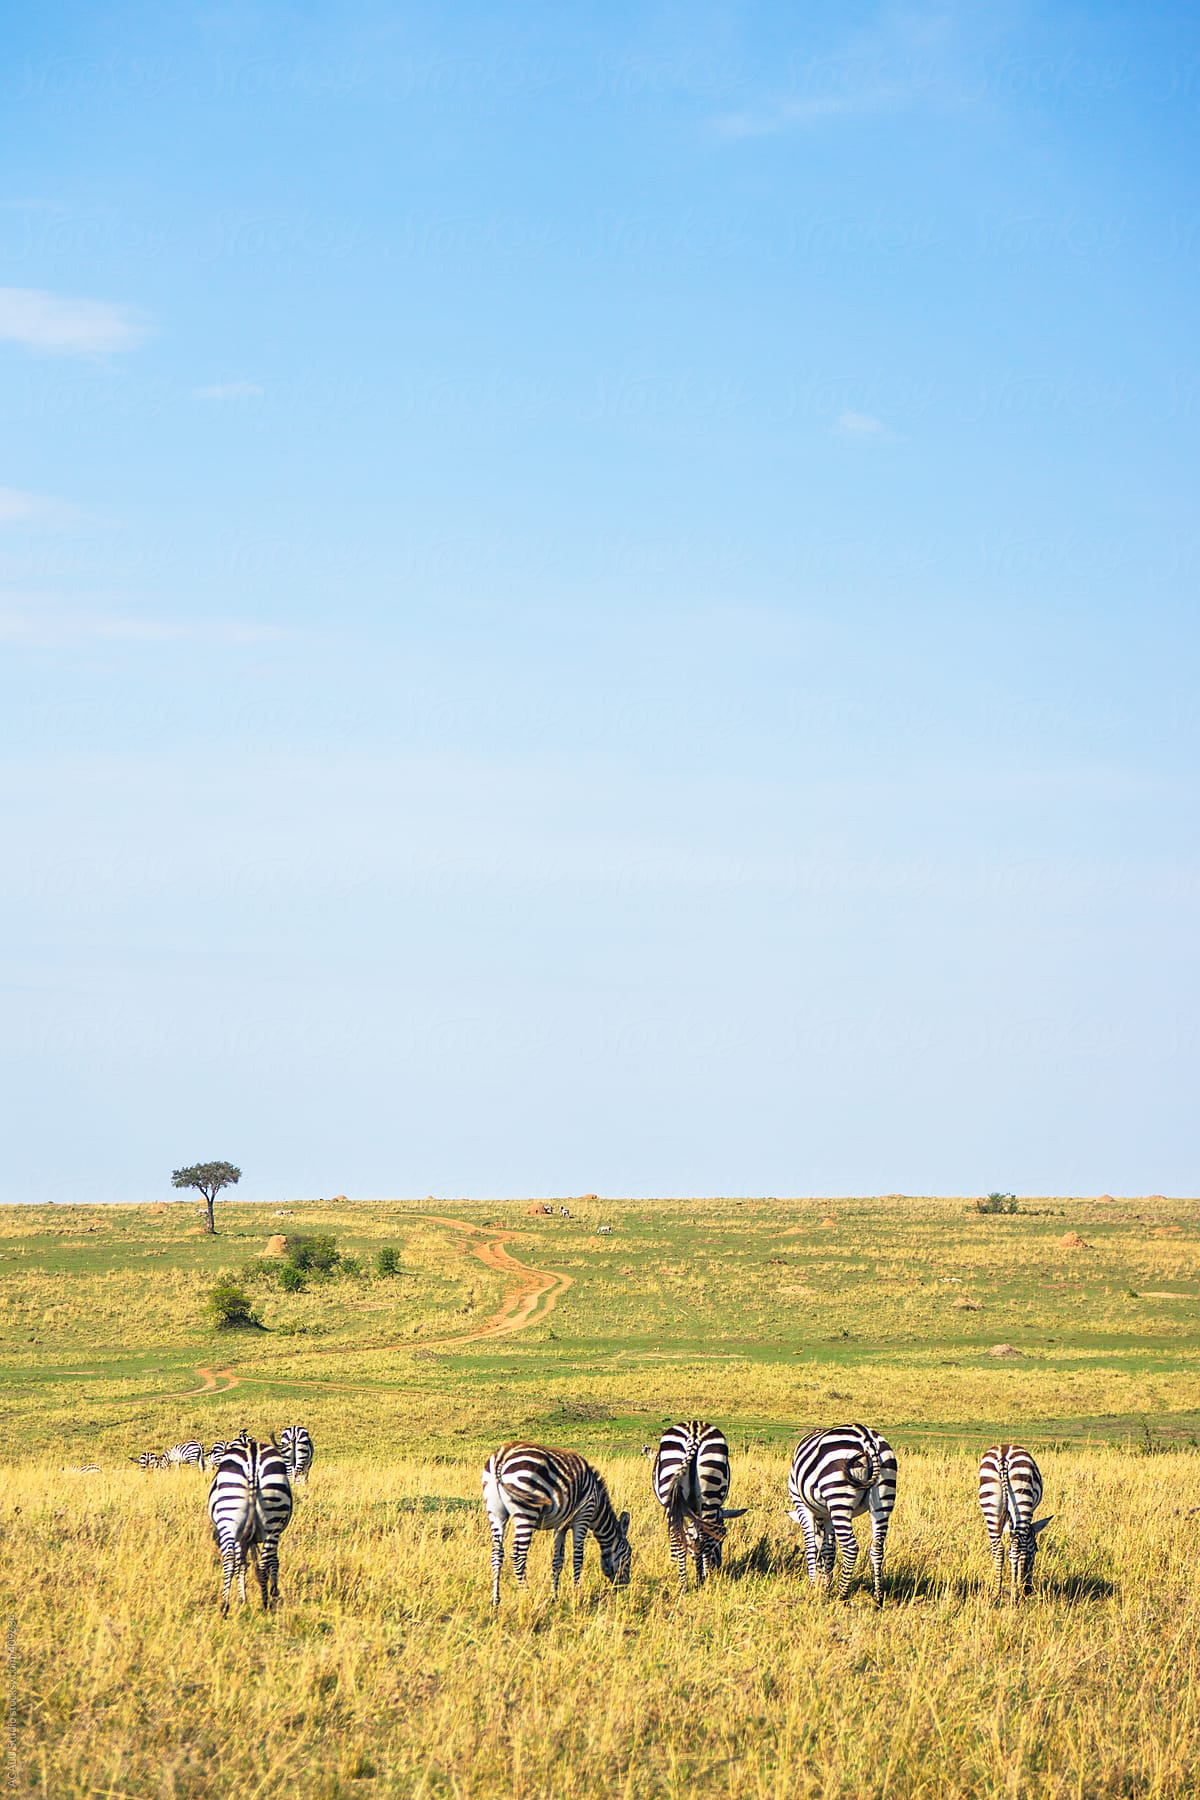 Group of zebras grazing